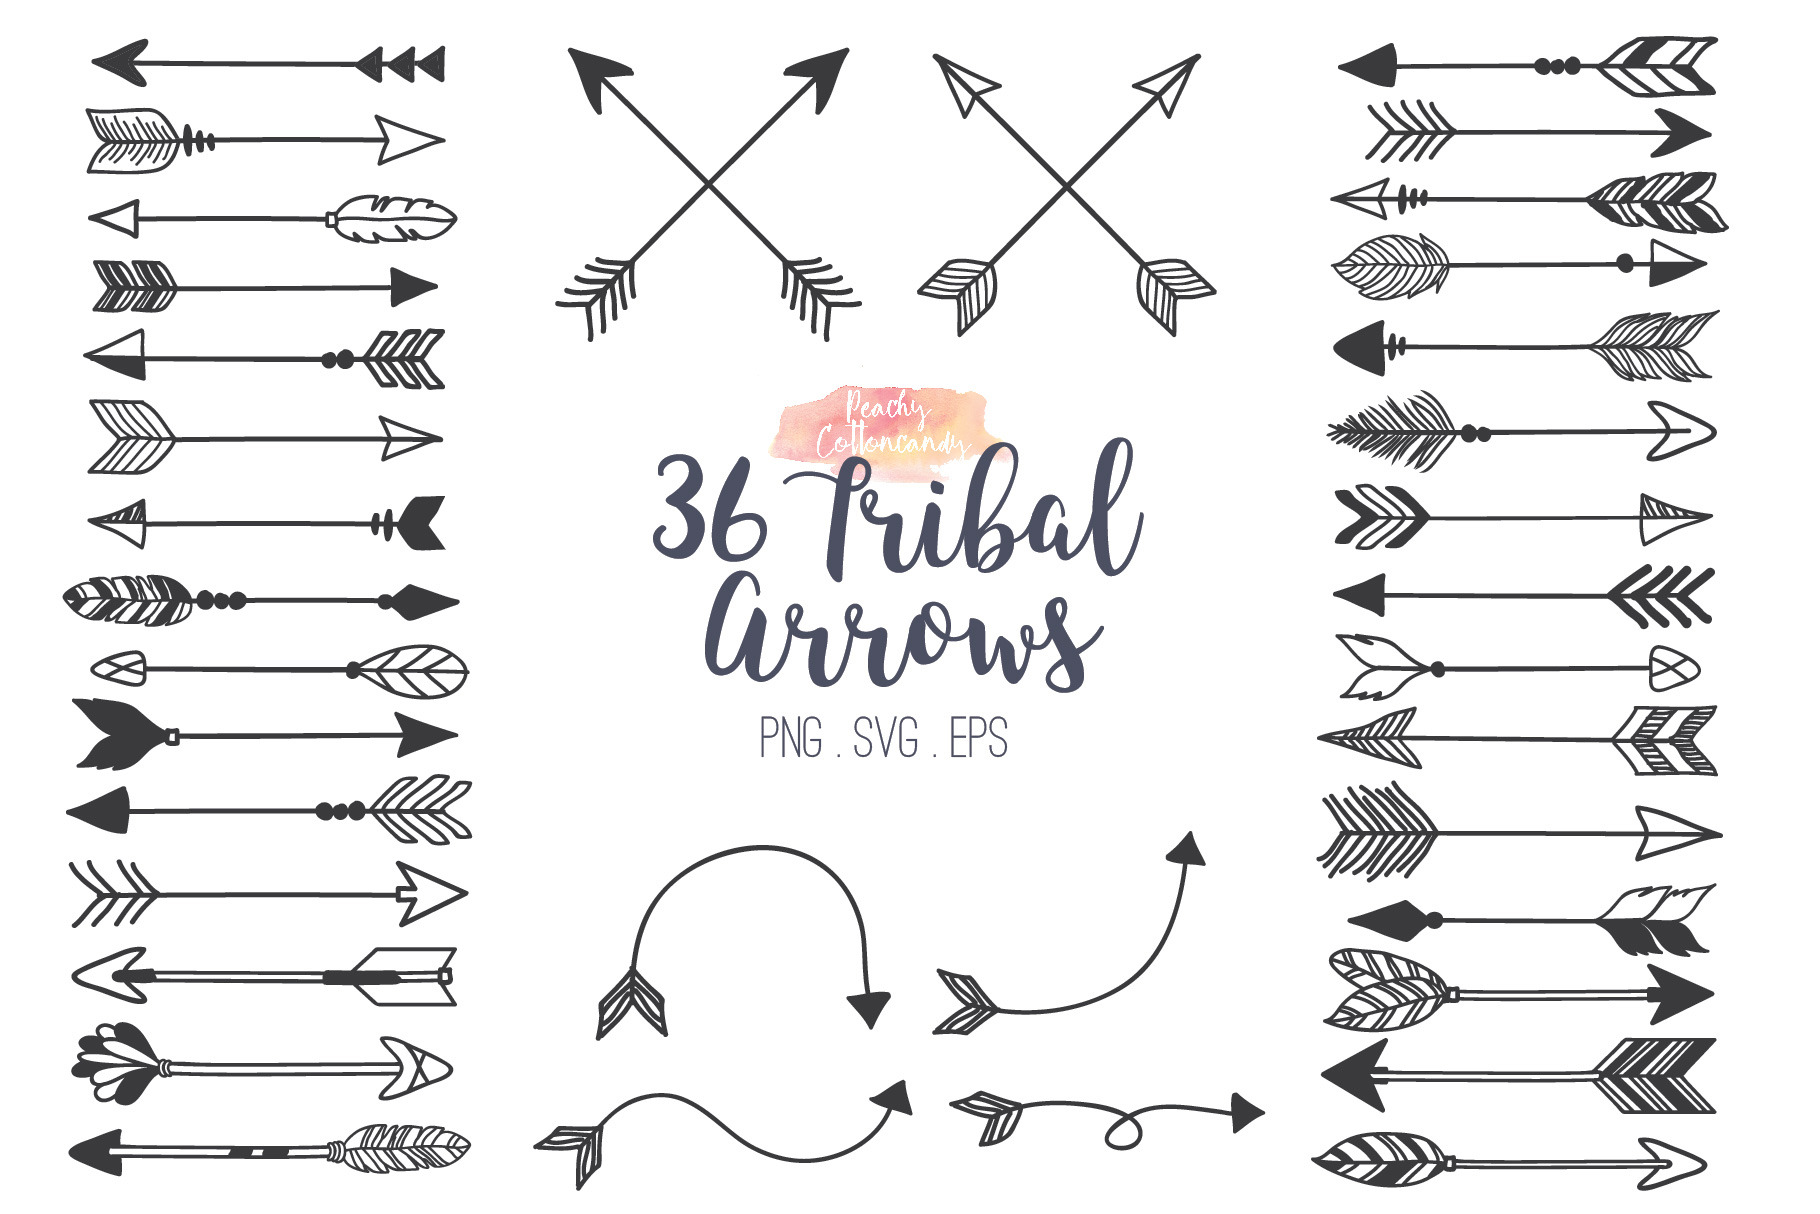 Download Tribal Arrows Clipart ~ Illustrations ~ Creative Market